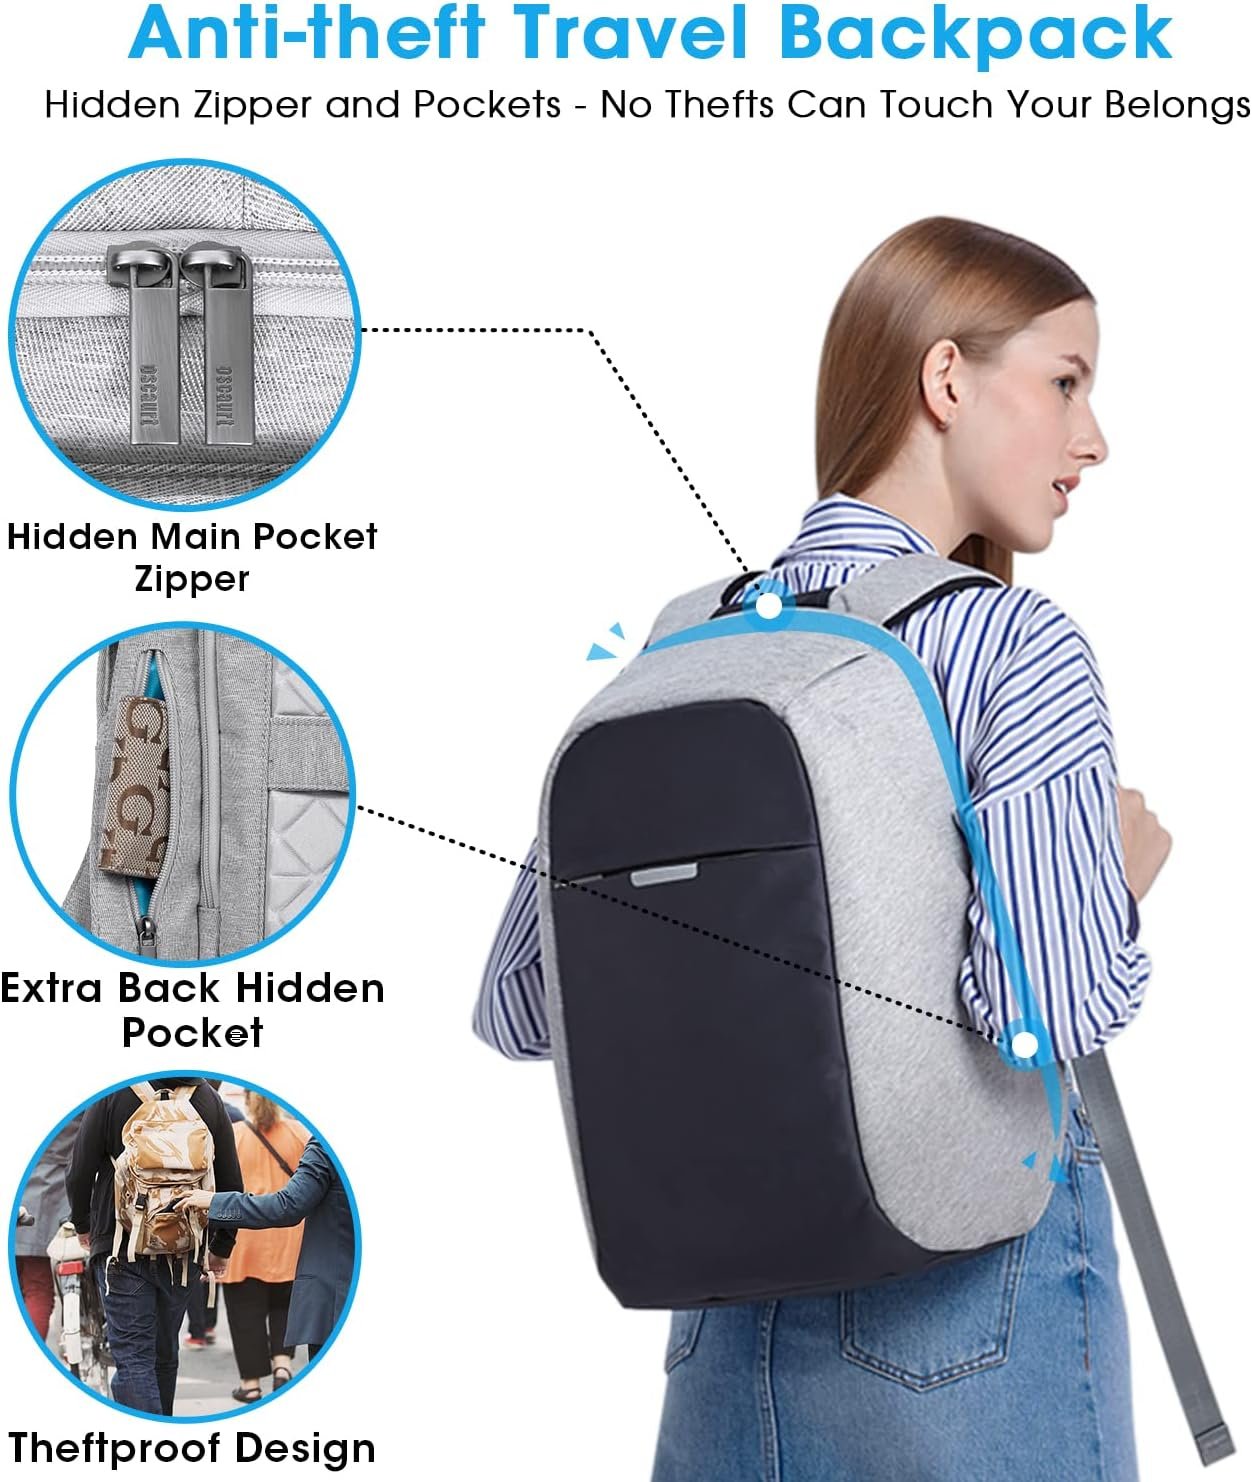 Oscaurt Anti Theft Backpack Review